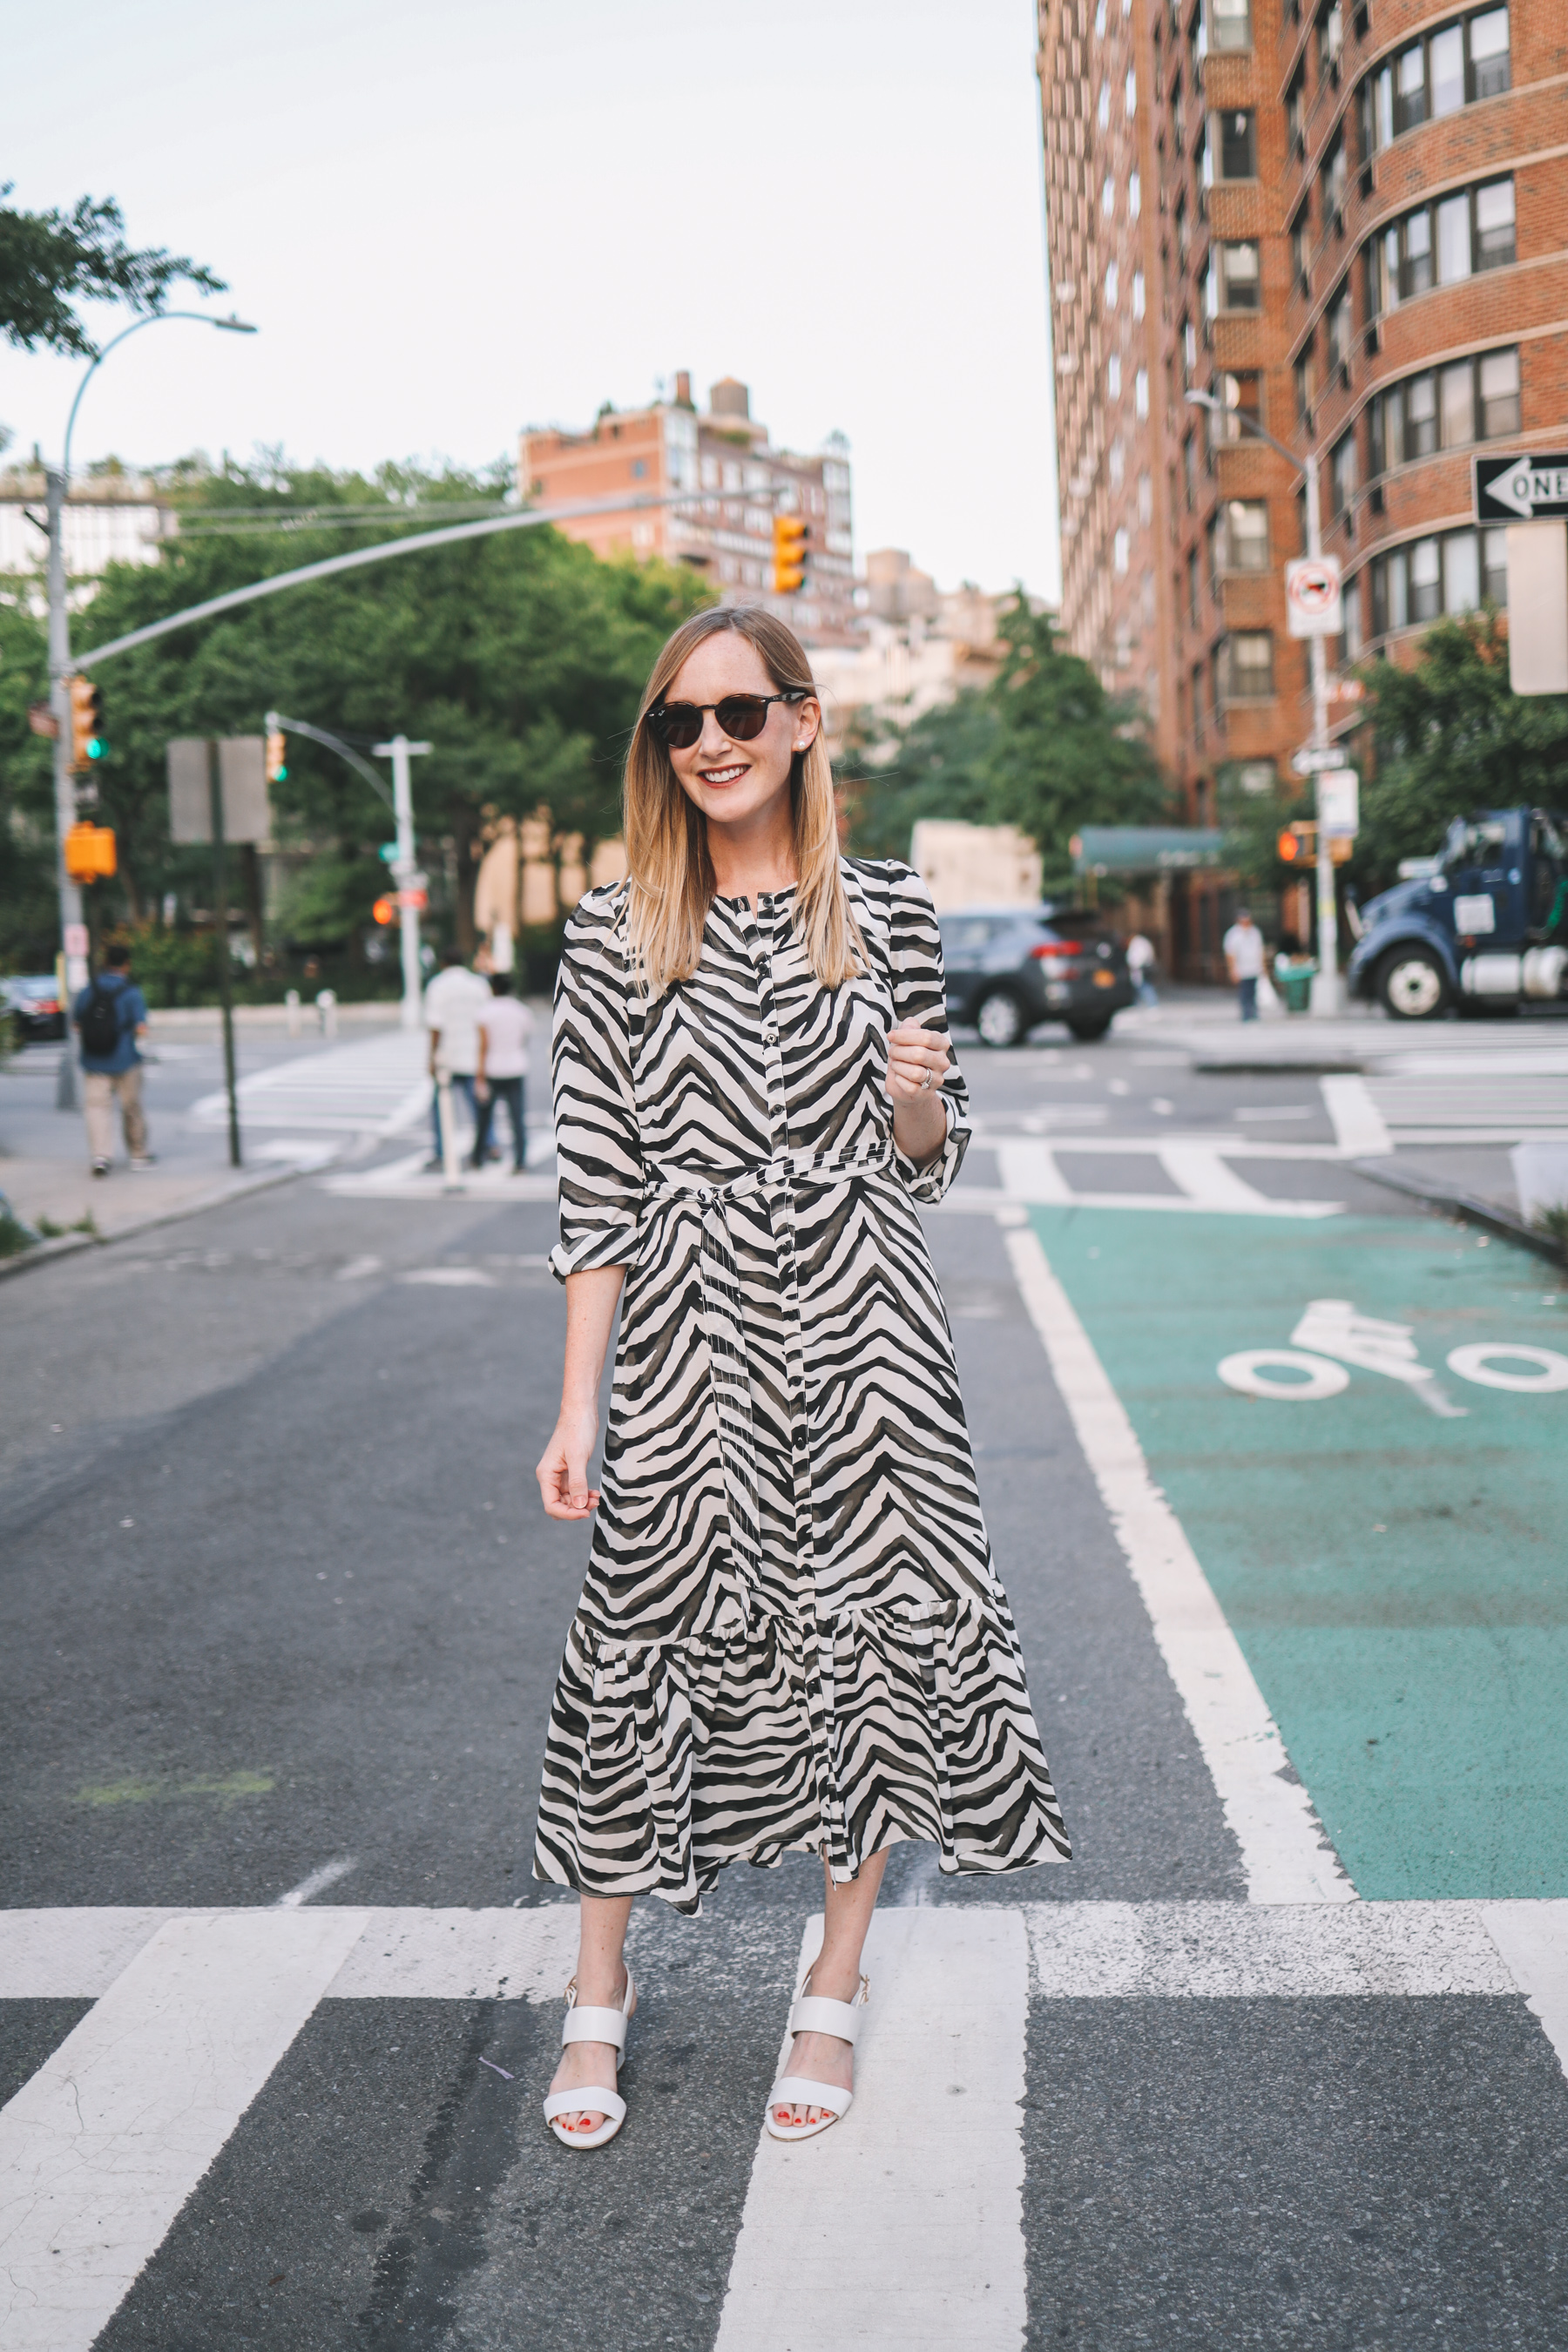 The  Zebra Dress from Banana Republic | Kelly in the City